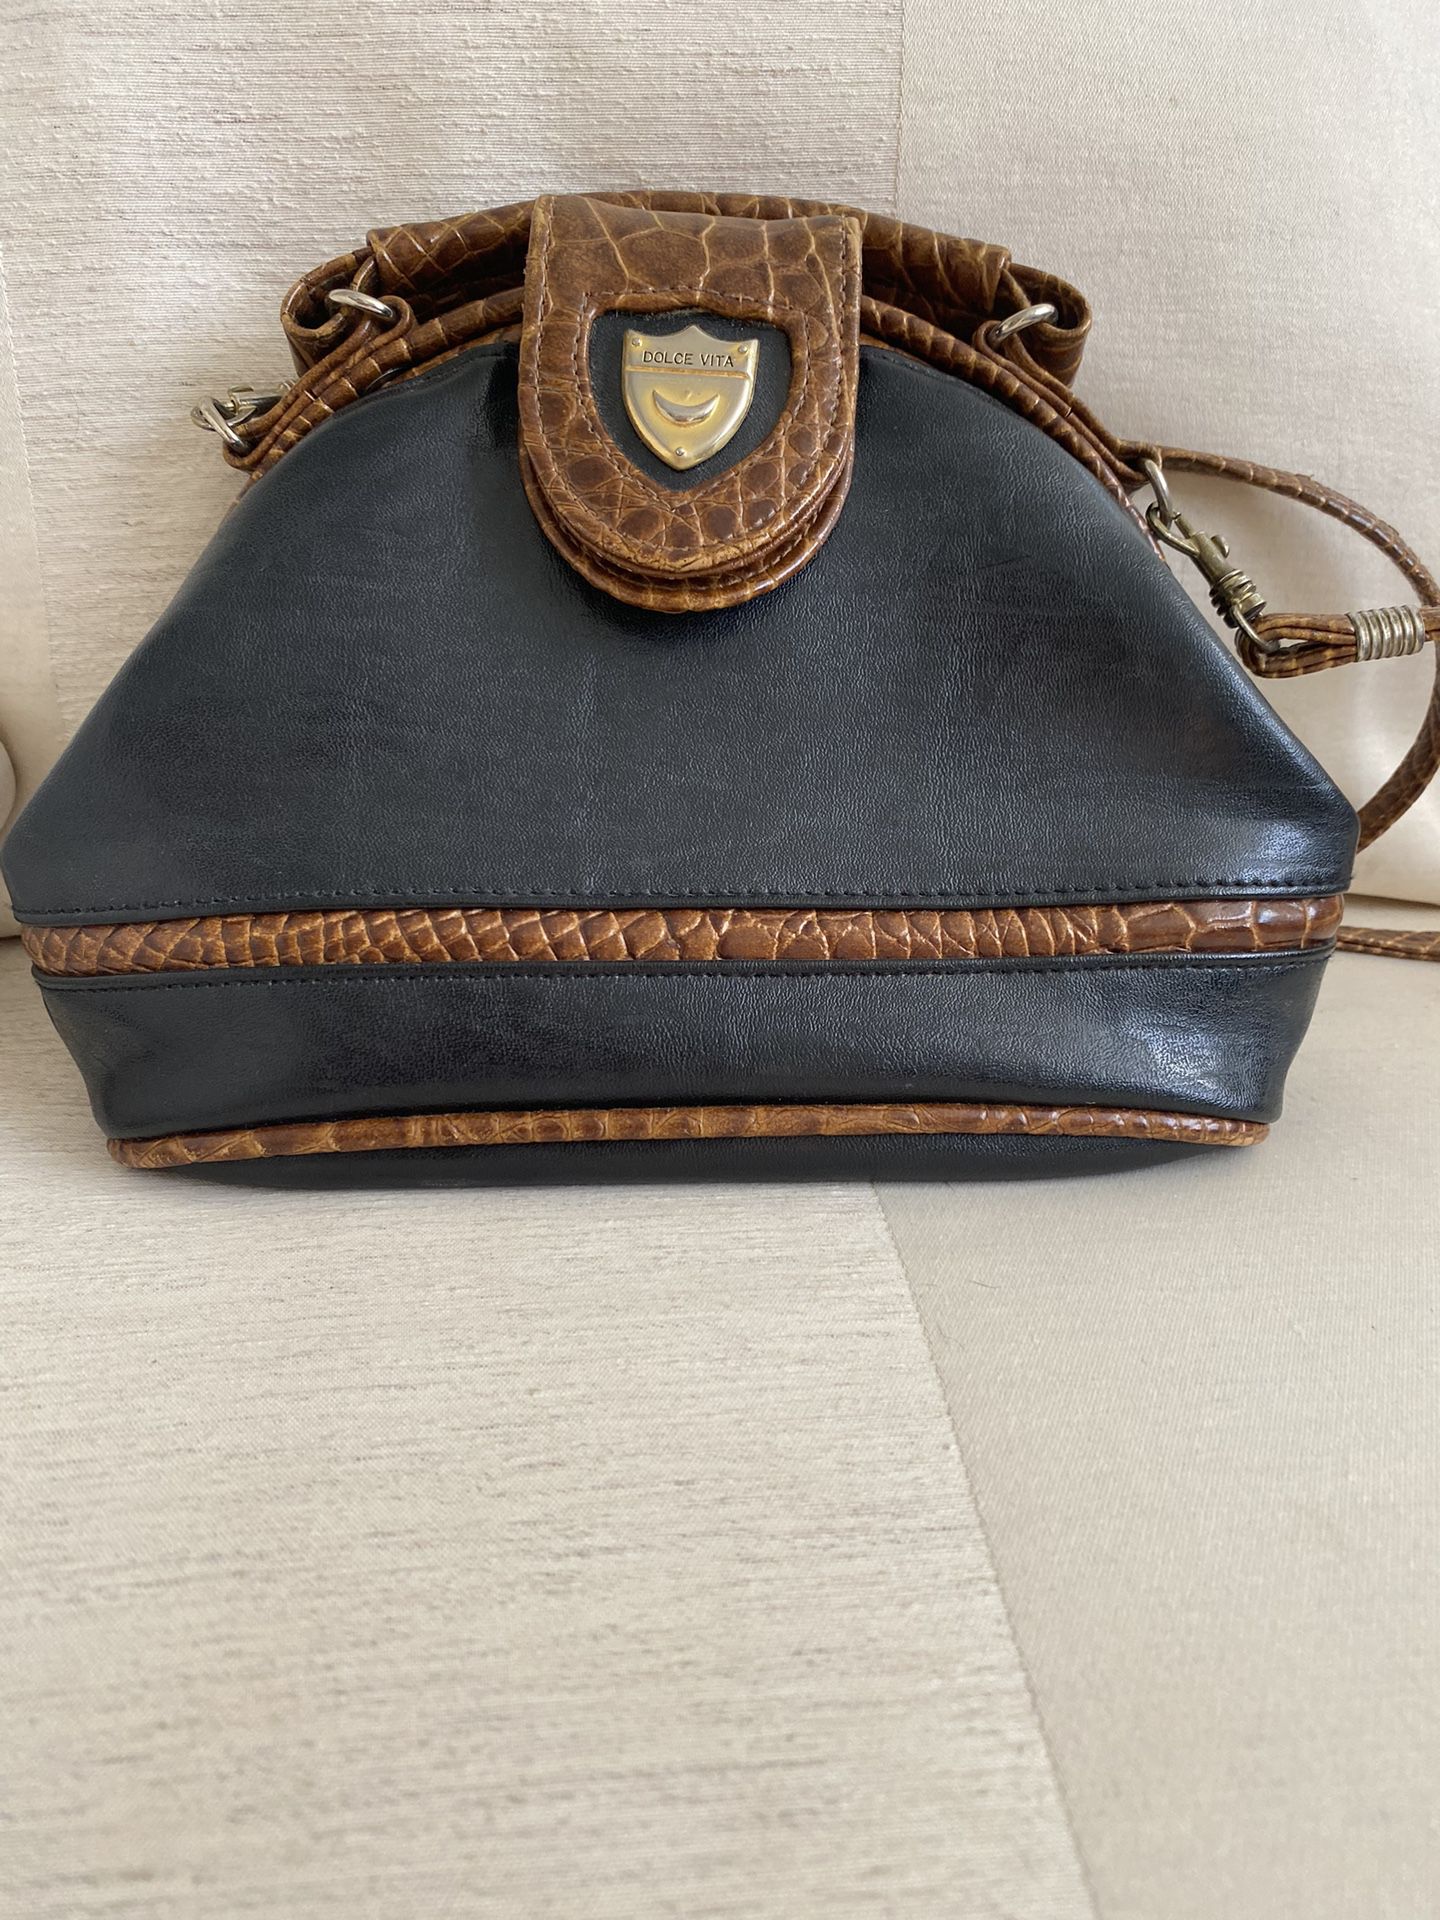 Vintage Leather Handbag -Fabulous!!!